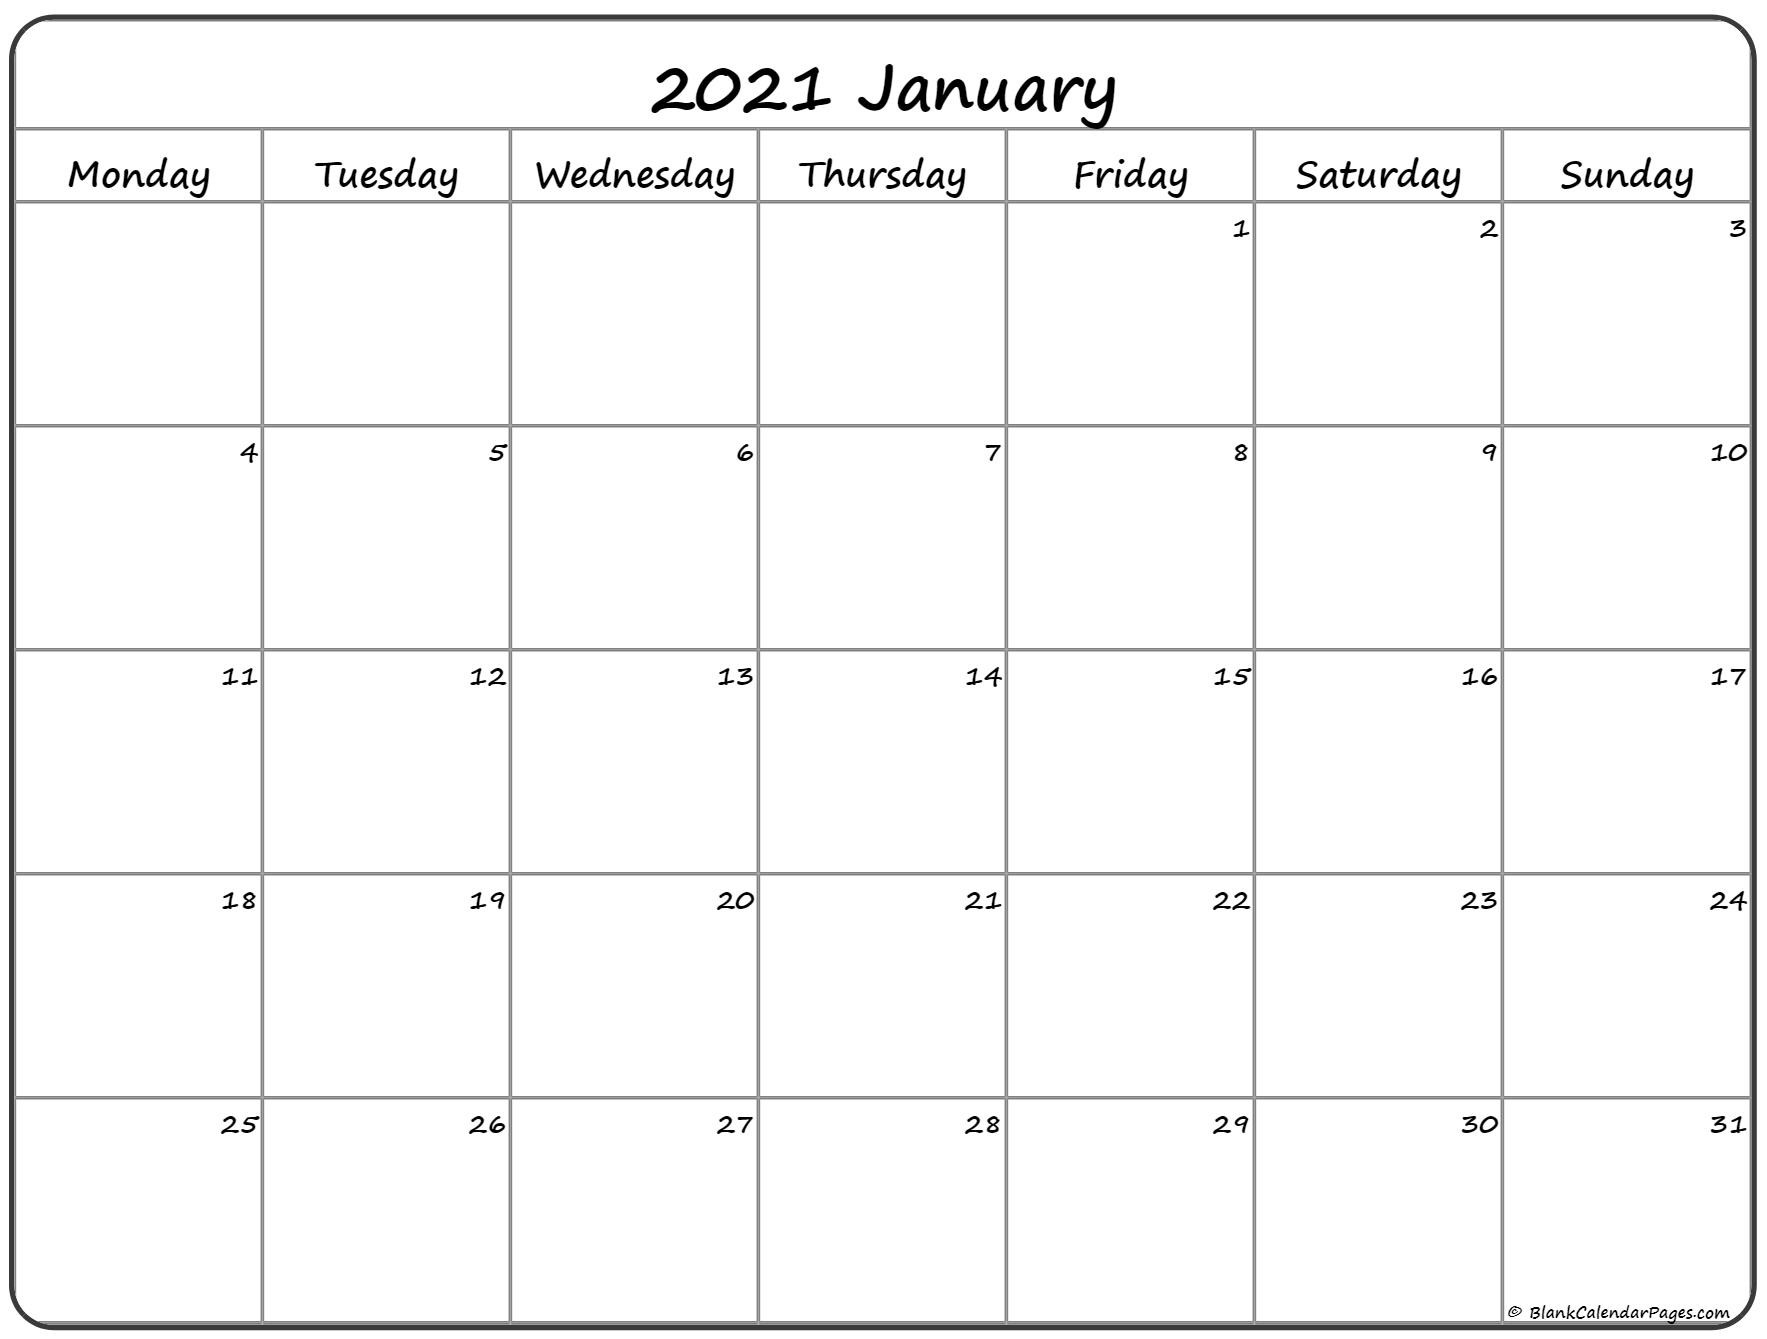 January 2021 Monday Calendar | Monday To Sunday-Sunday To Saturday Monthly Calendar 2021